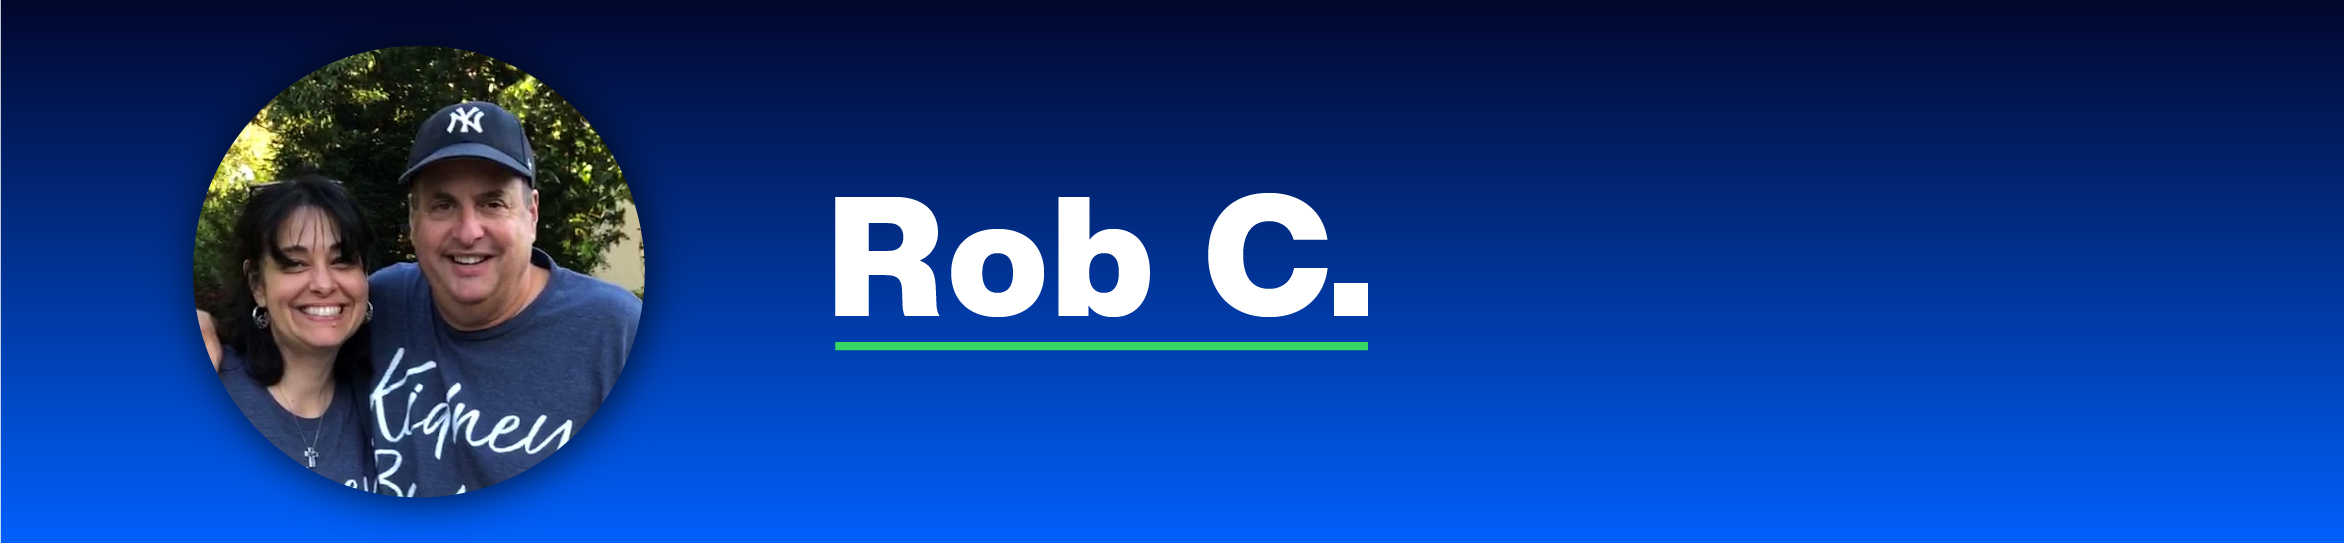 Rob_C_Member_Story-01.jpg